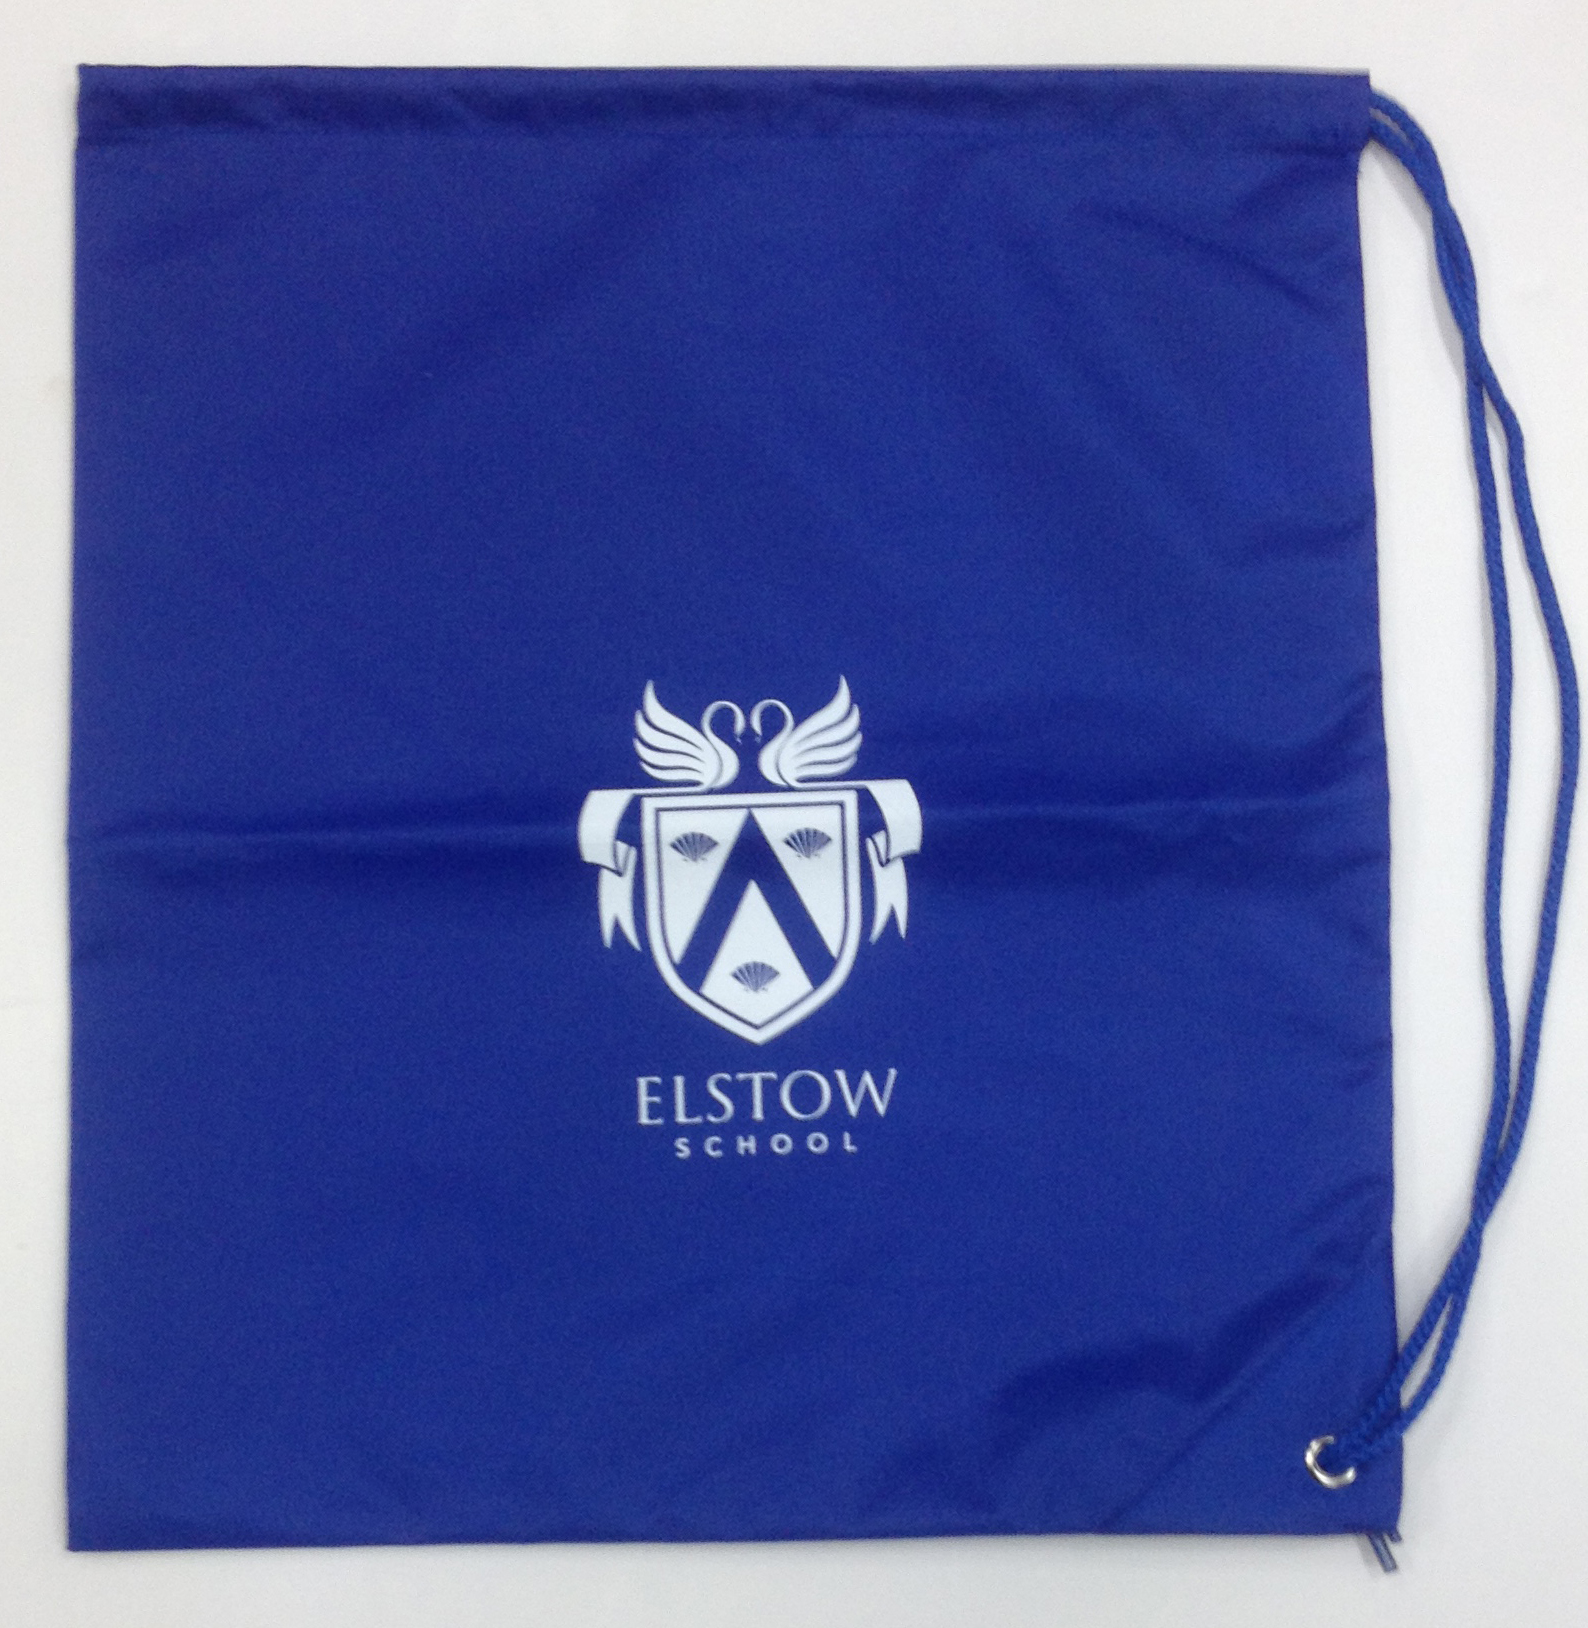 Elstow School Premium Shoe Bag (Royal)